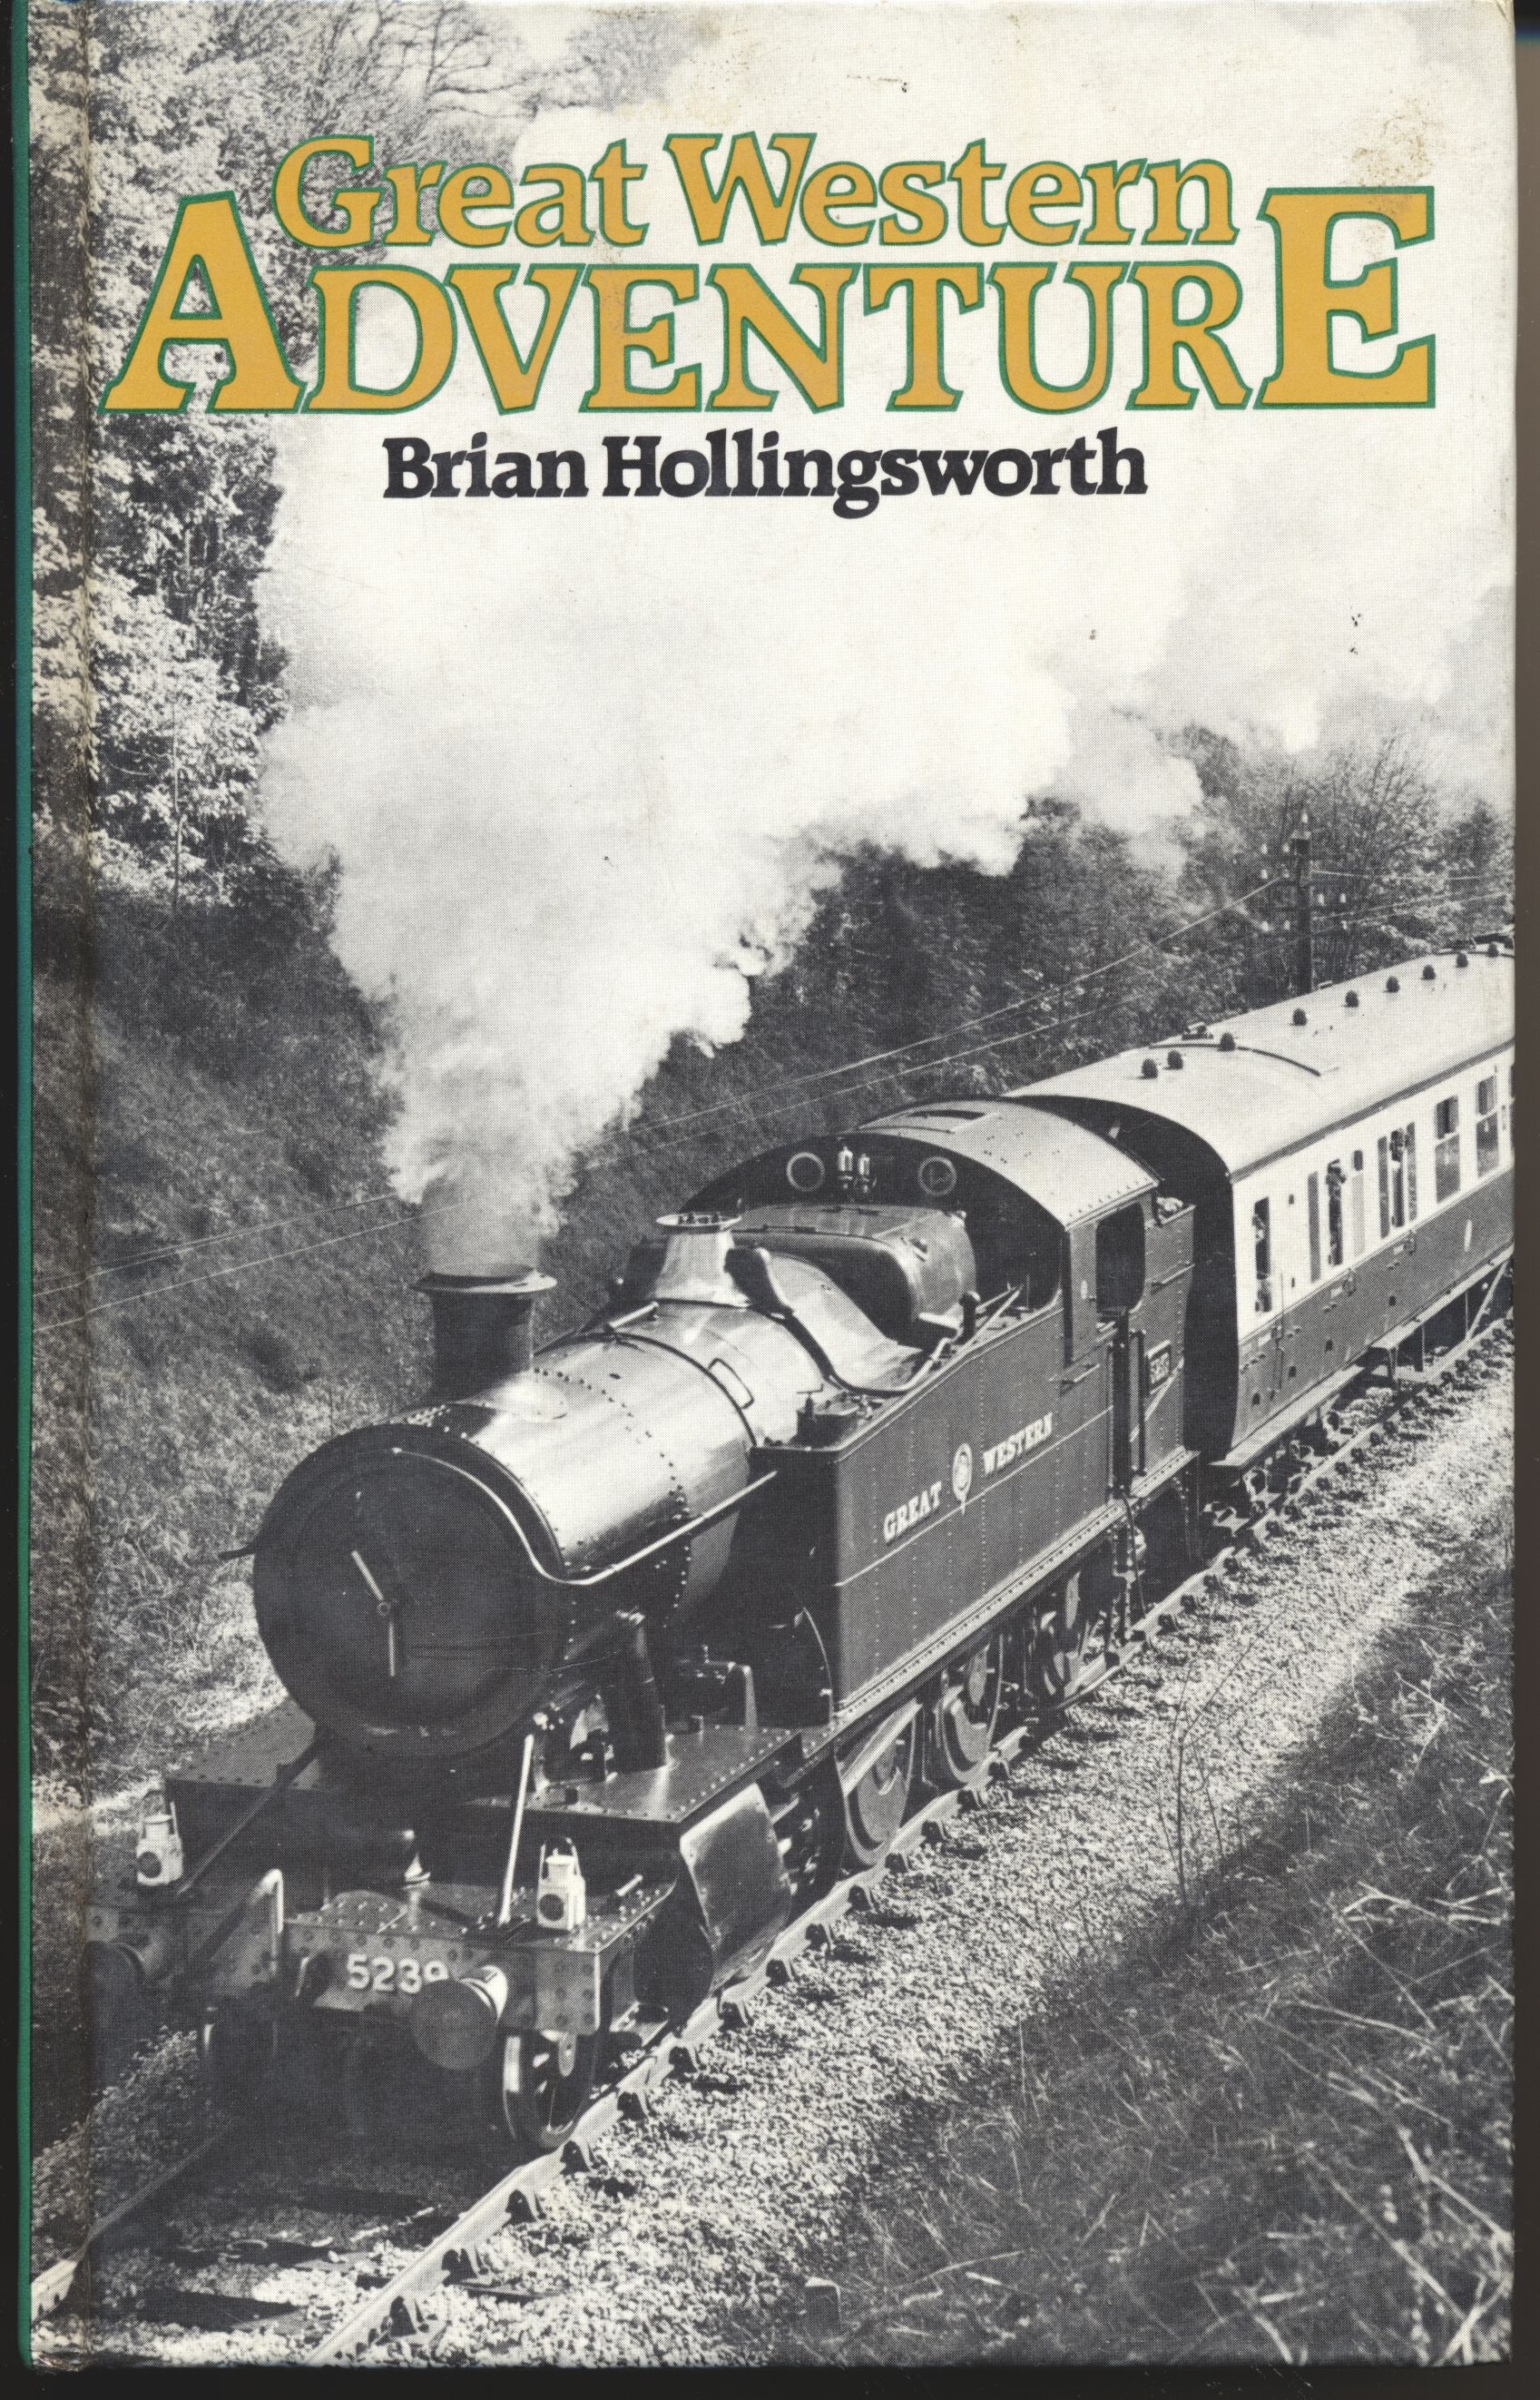 Great Western Adventure - Brian Hollingsworth